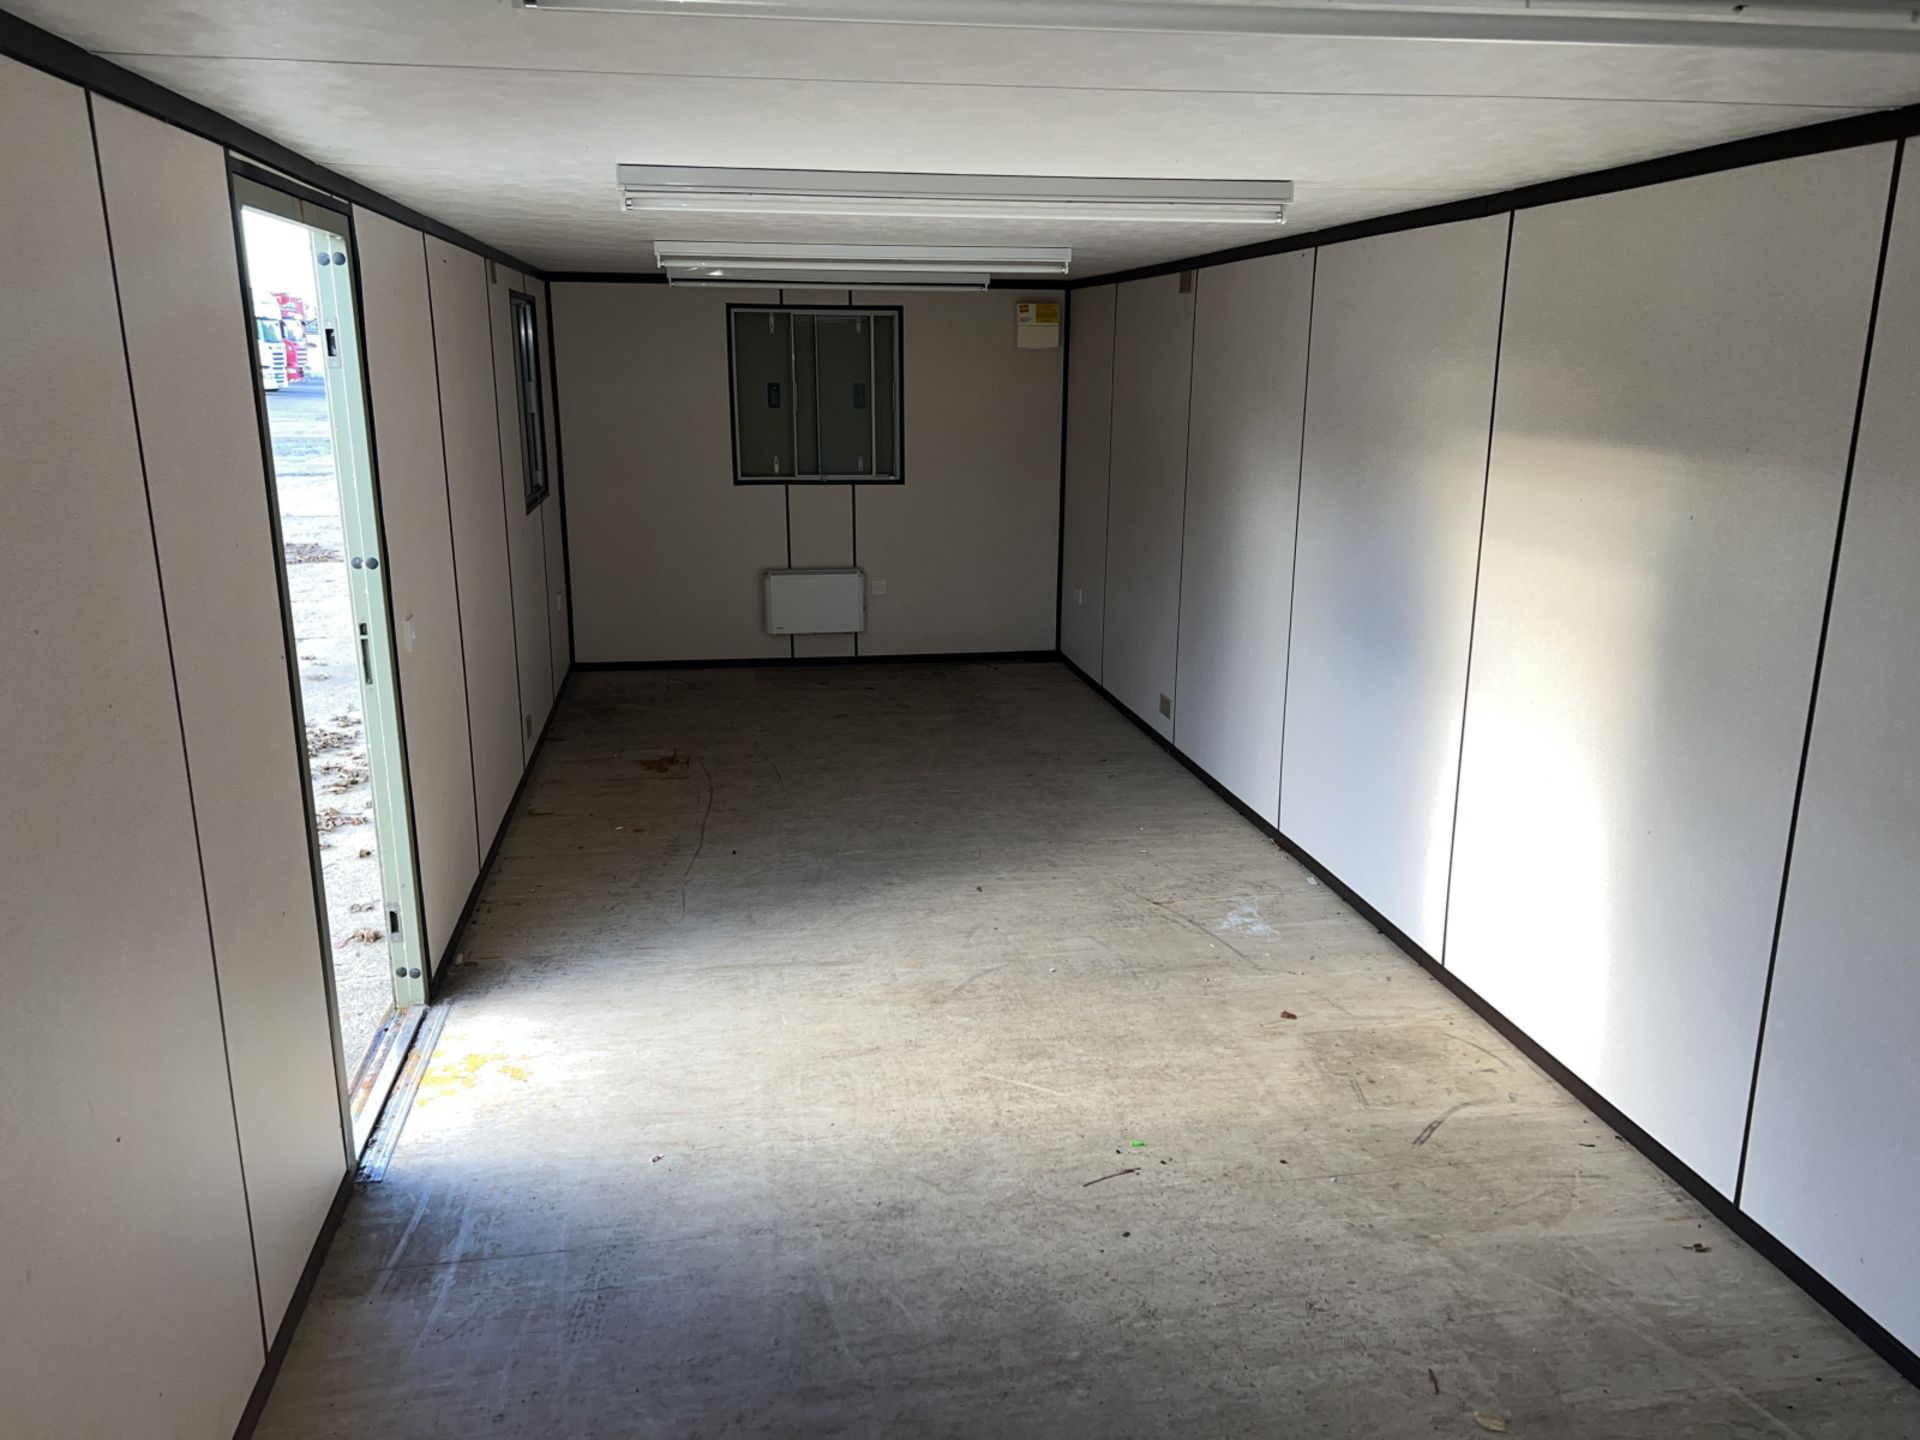 30 foot portacabin office suite - 230V fuse board, 5x tubular lighting, 2x heaters, 3x windows - Image 6 of 16